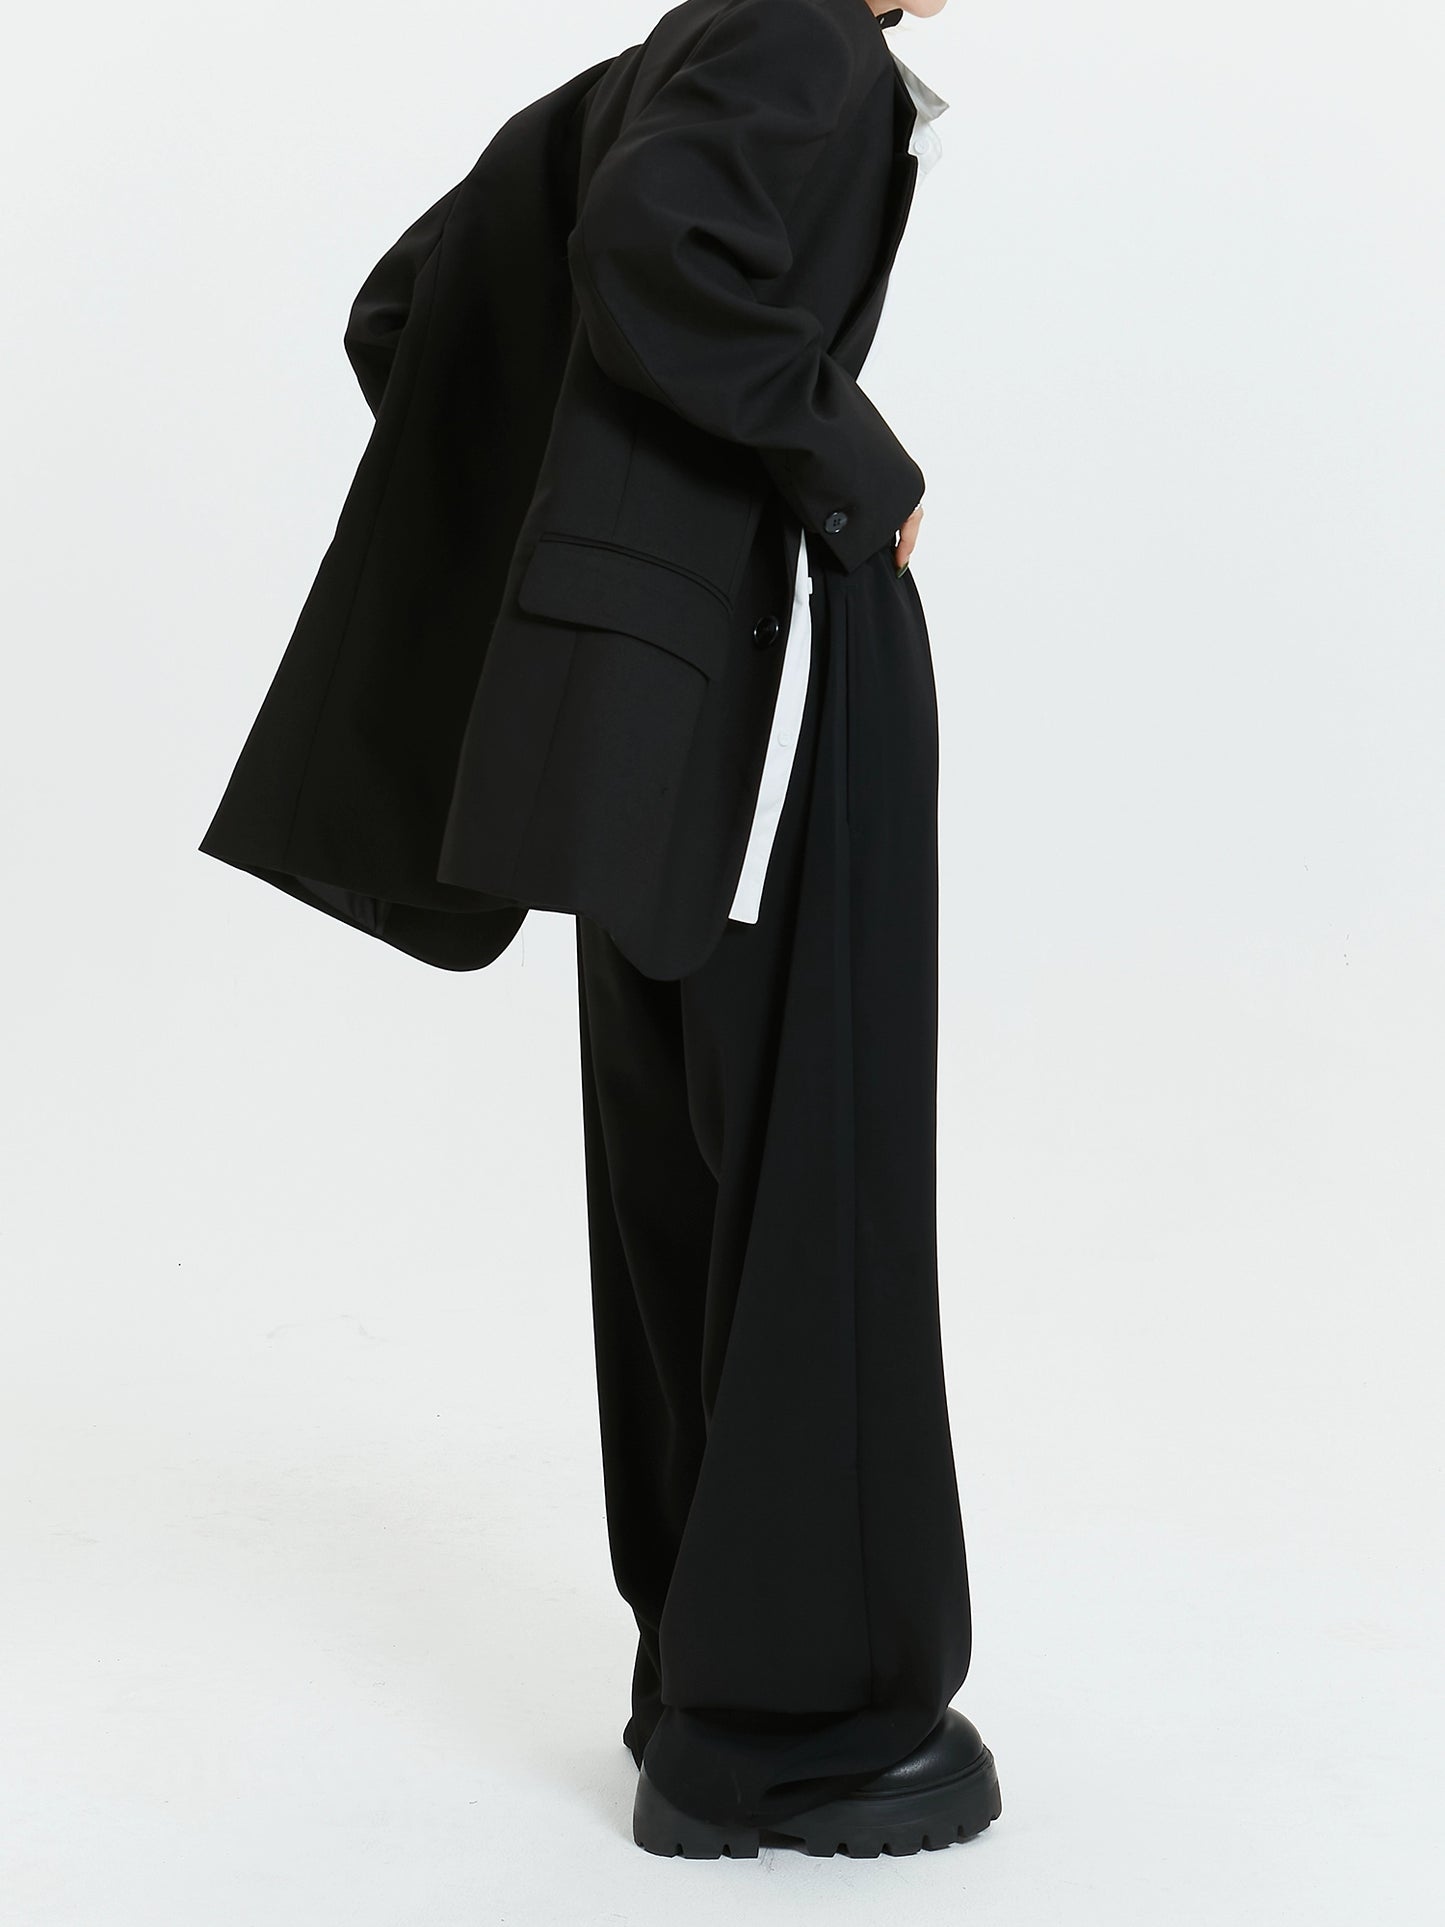 MICHINNYON black/grey casual elastic waistband straight loose fit versatile trousers drape simple suit pants trend